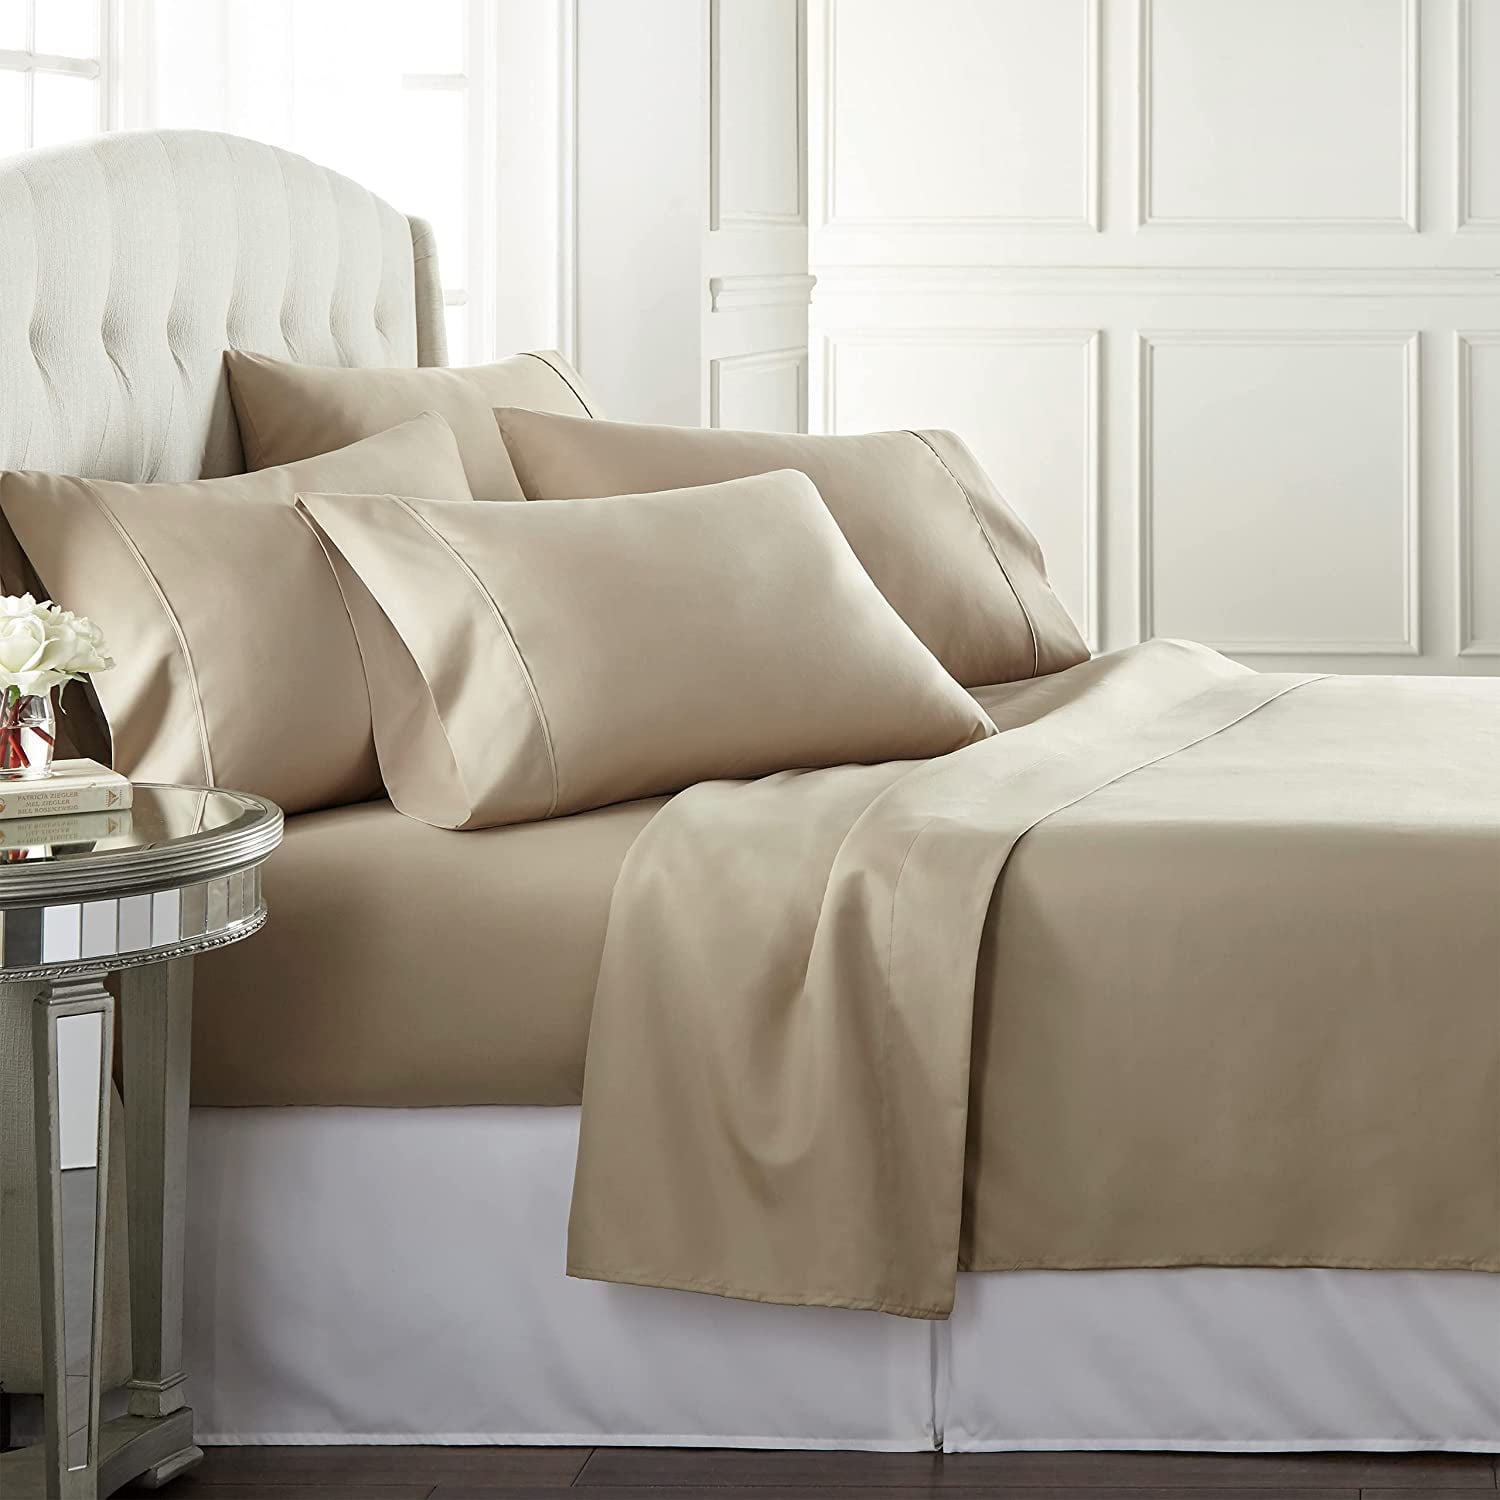 Danjor Linens 1800 Series 6 Piece Bedding Sheet & Pillowcases Sets with ...